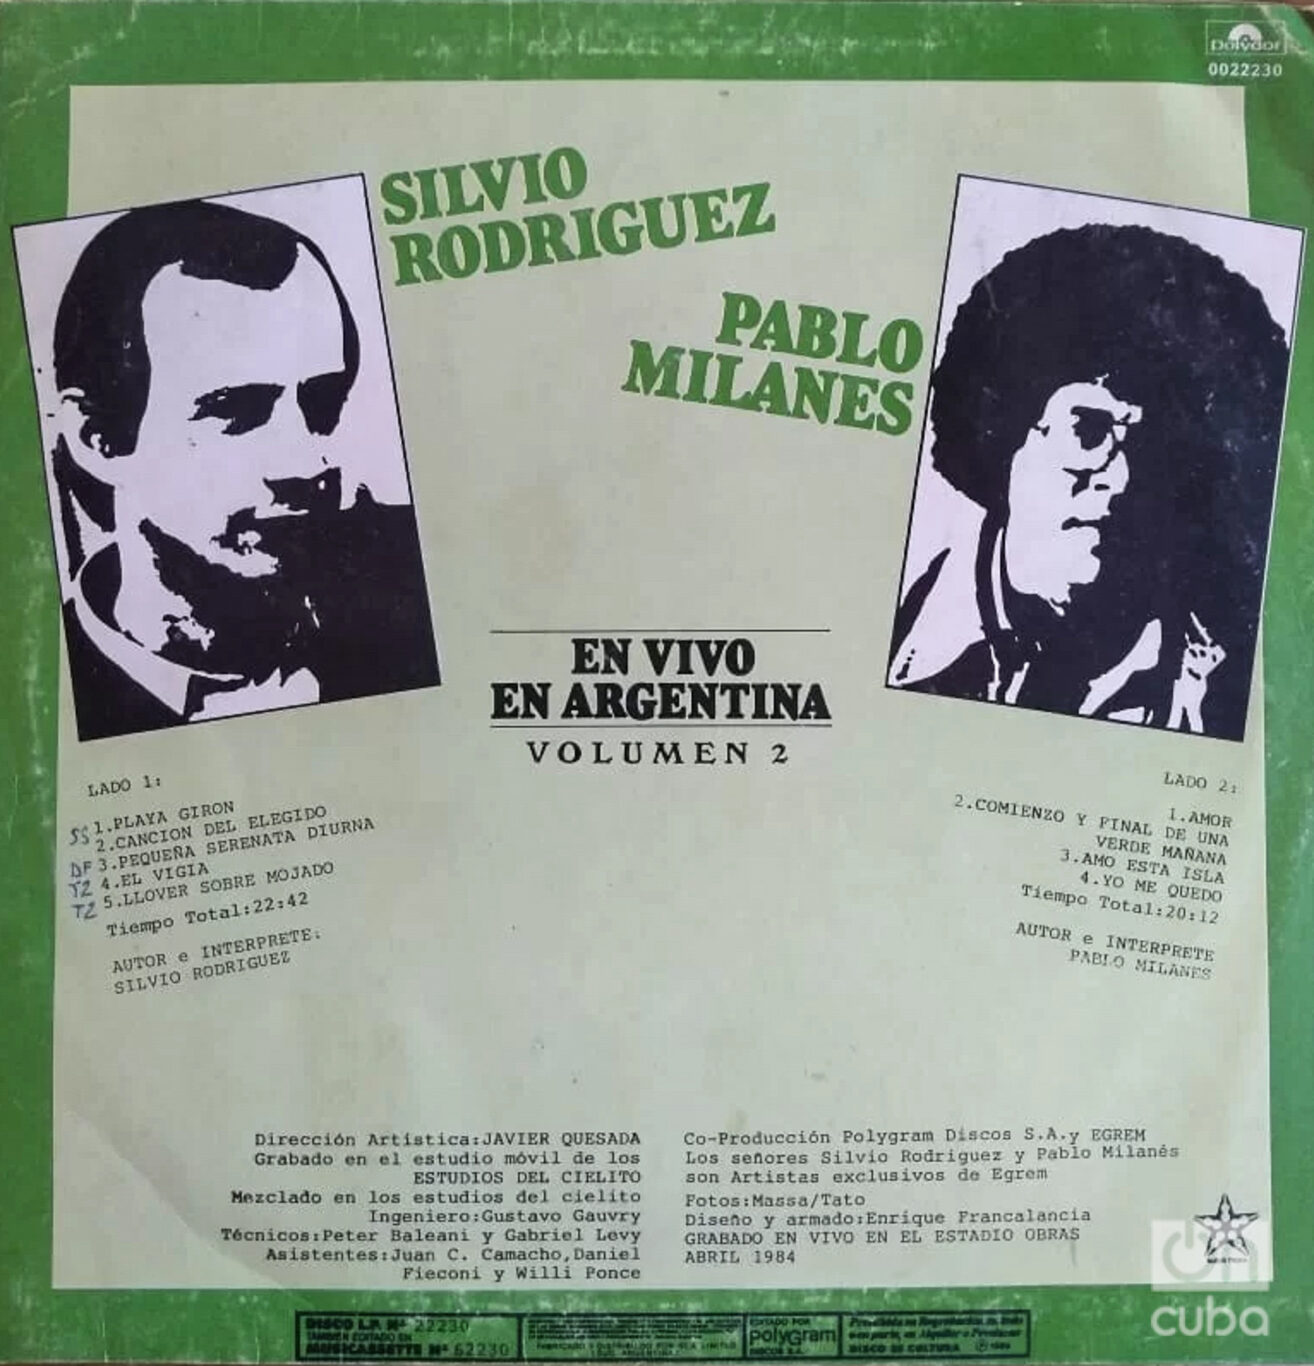 Volume 2 of the album Silvio Rodríguez – Pablo Milanés: En vivo en Argentina.